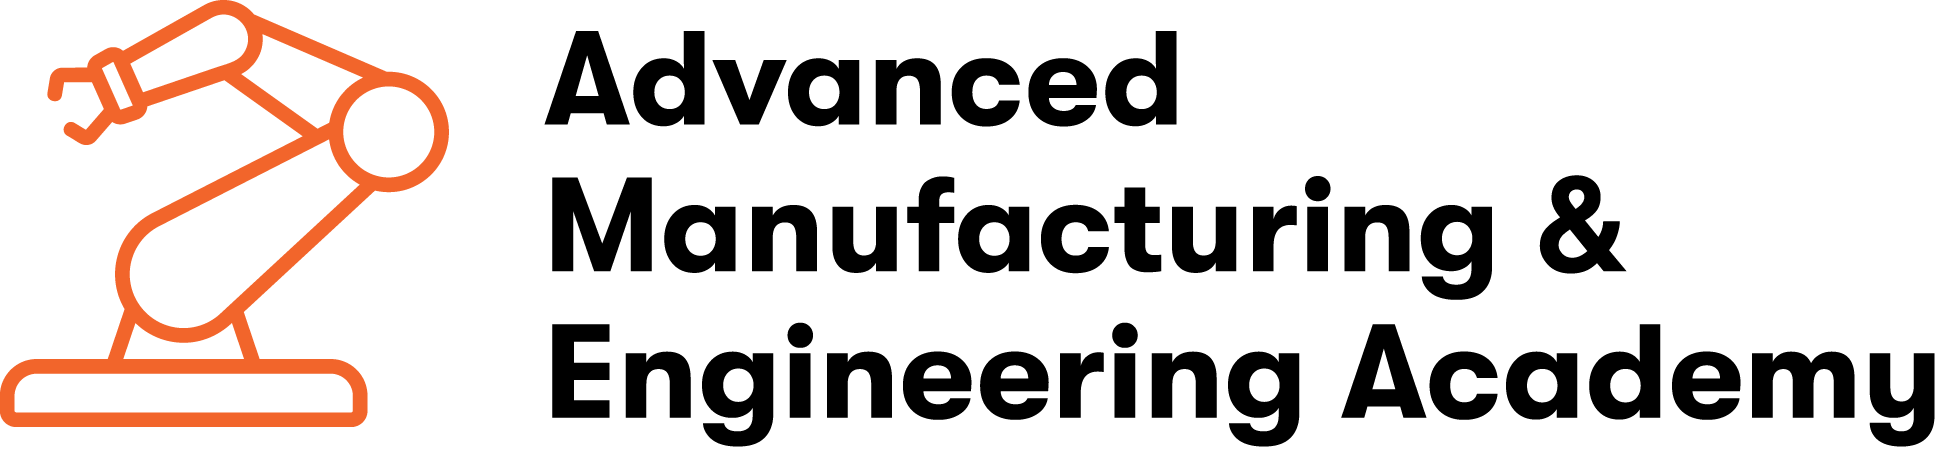 AMEA Logo